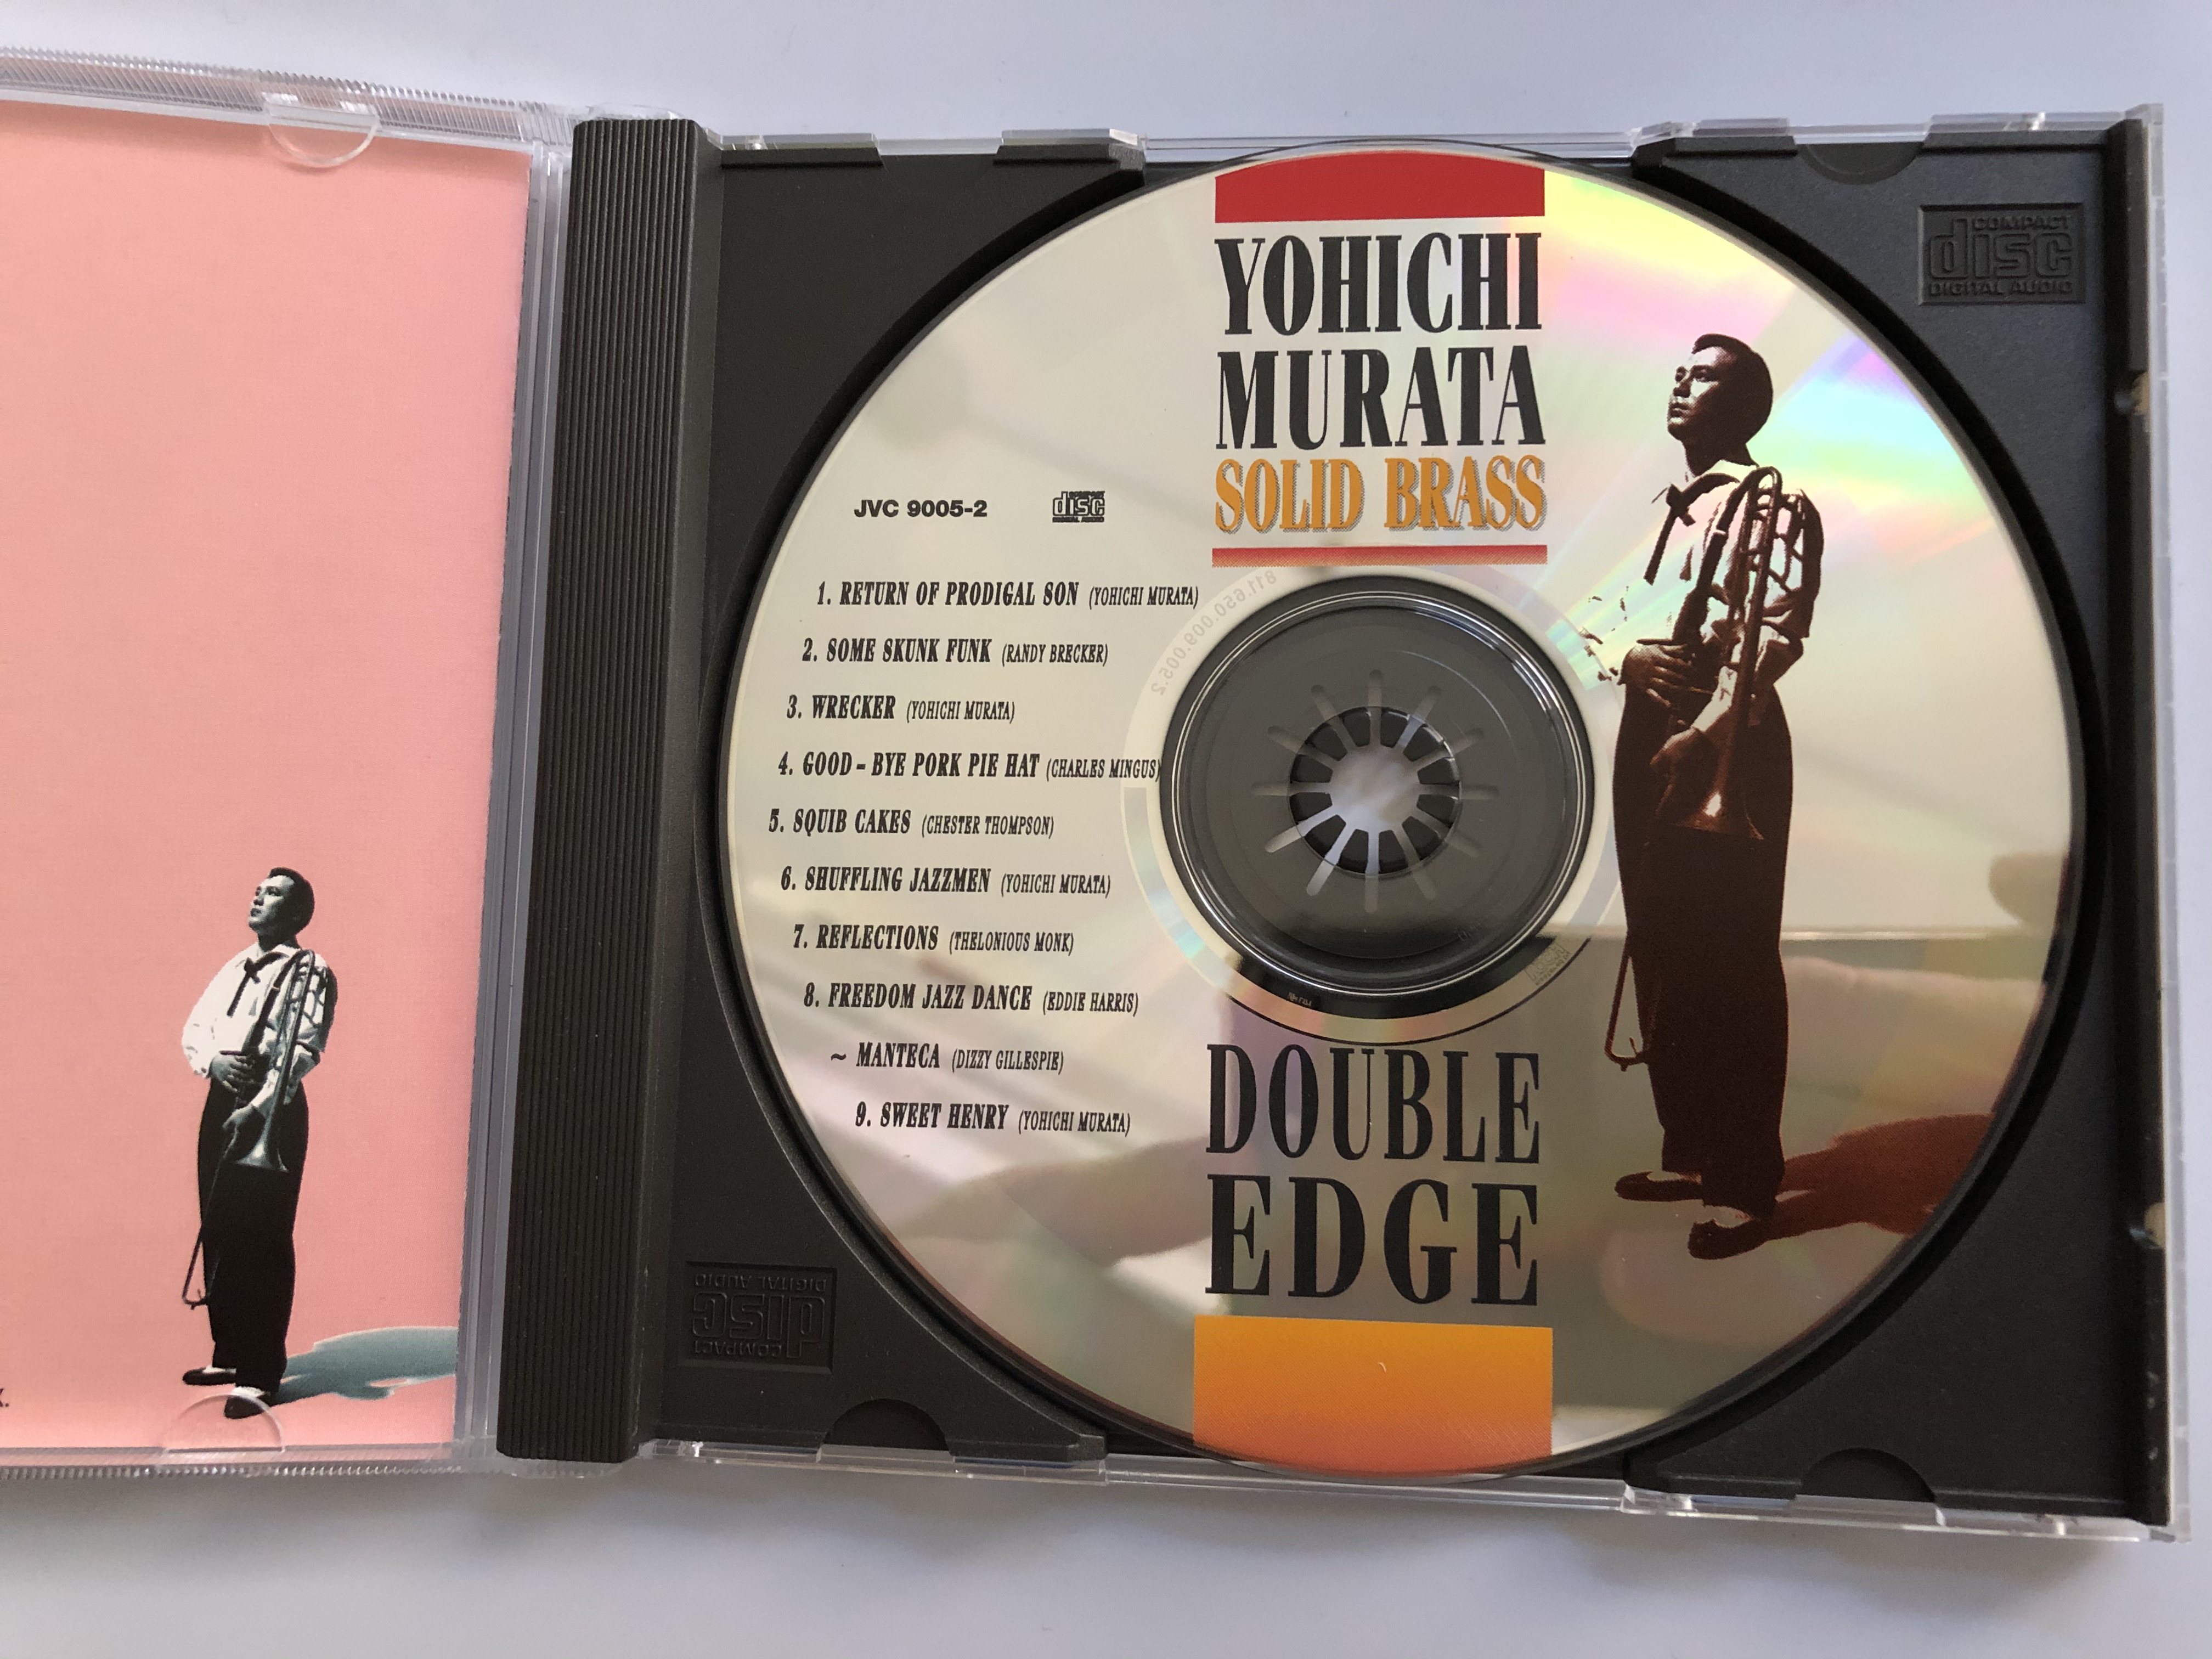 yoichi-murata-solid-brass-double-edge-jvc-audio-cd-1996-jvc-9005-2-4-.jpg